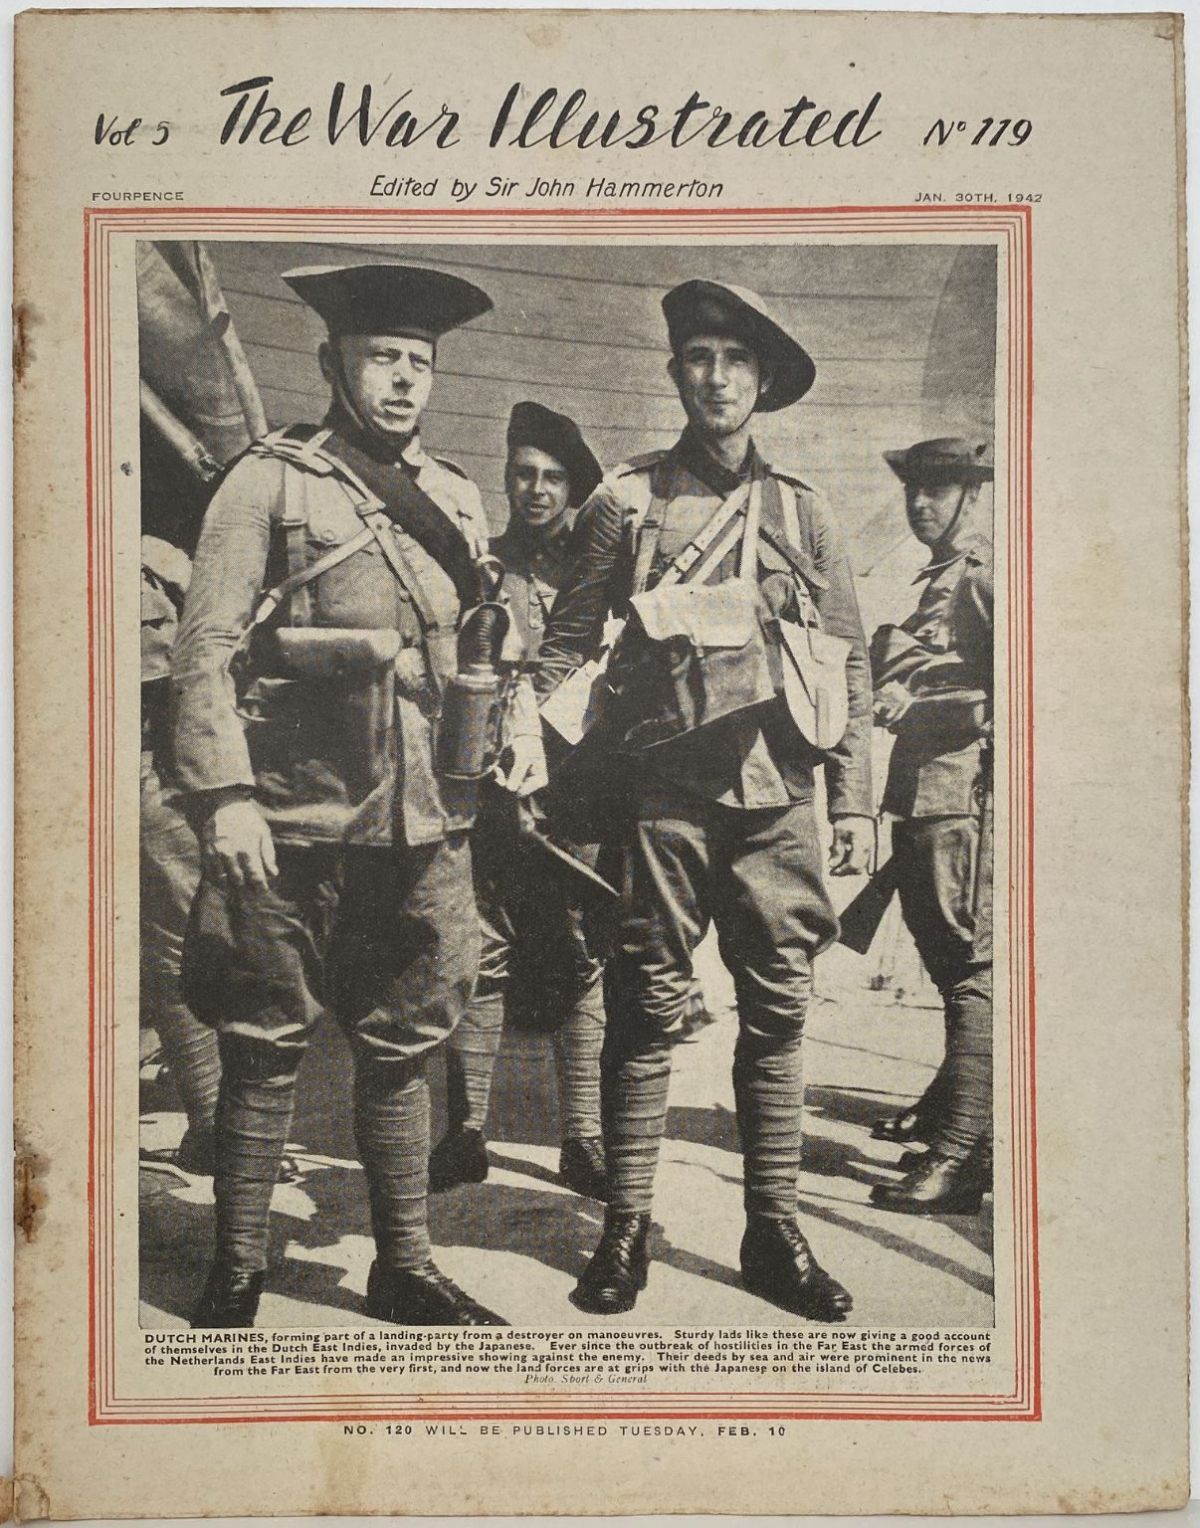 THE WAR ILLUSTRATED - Vol 5, No 119, 30th Jan 1942